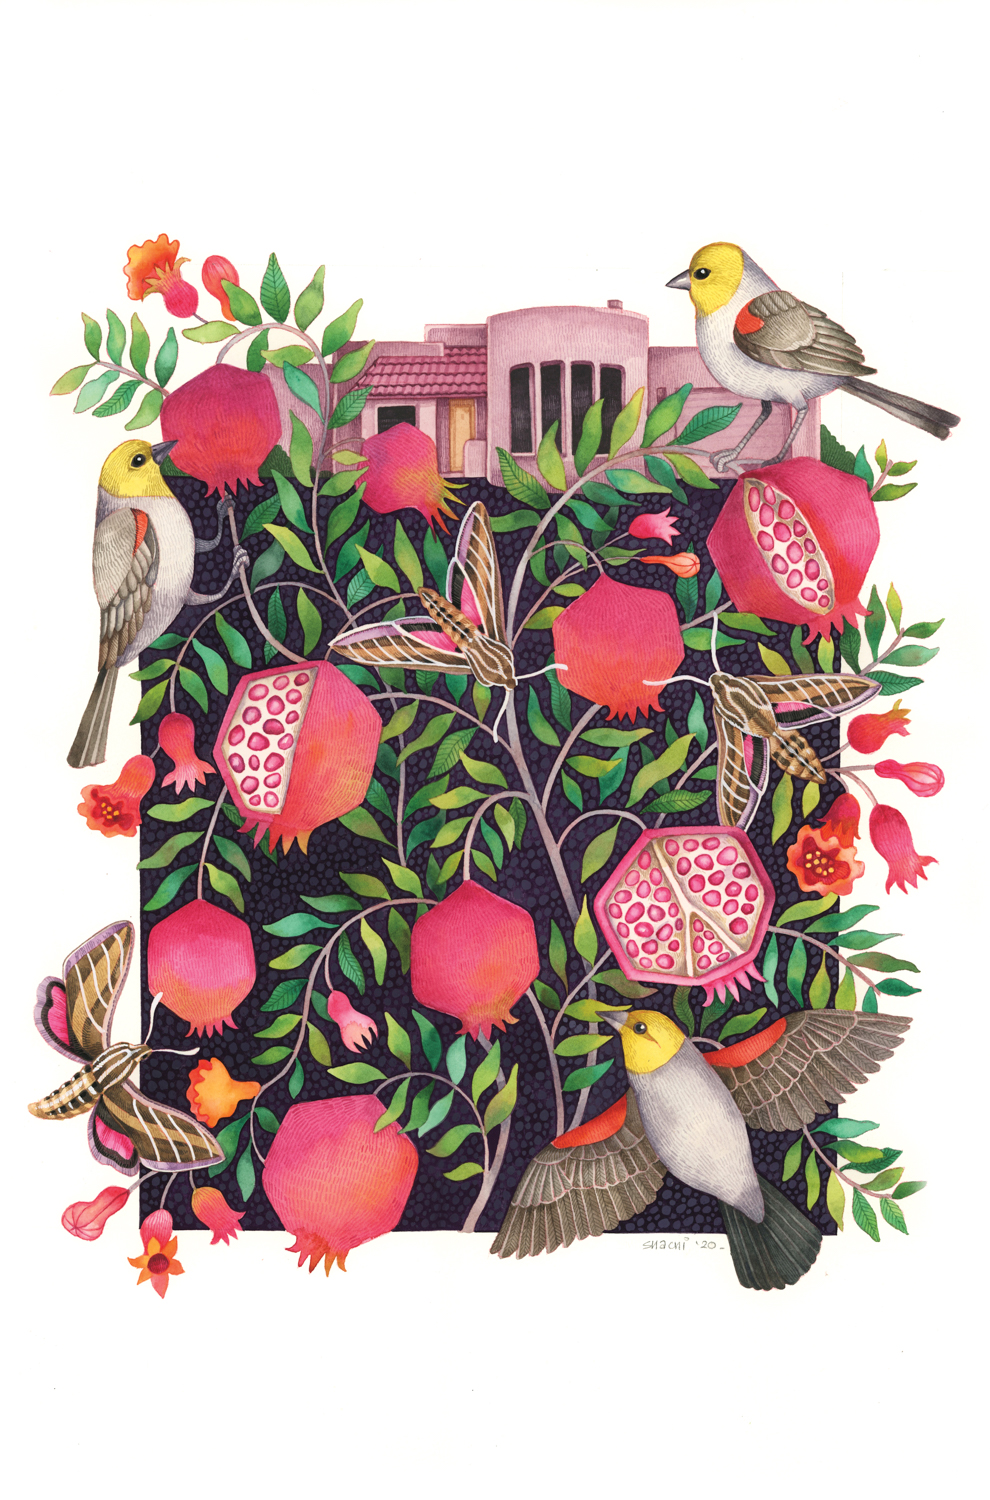 Artwork representing fruit, birds and vines